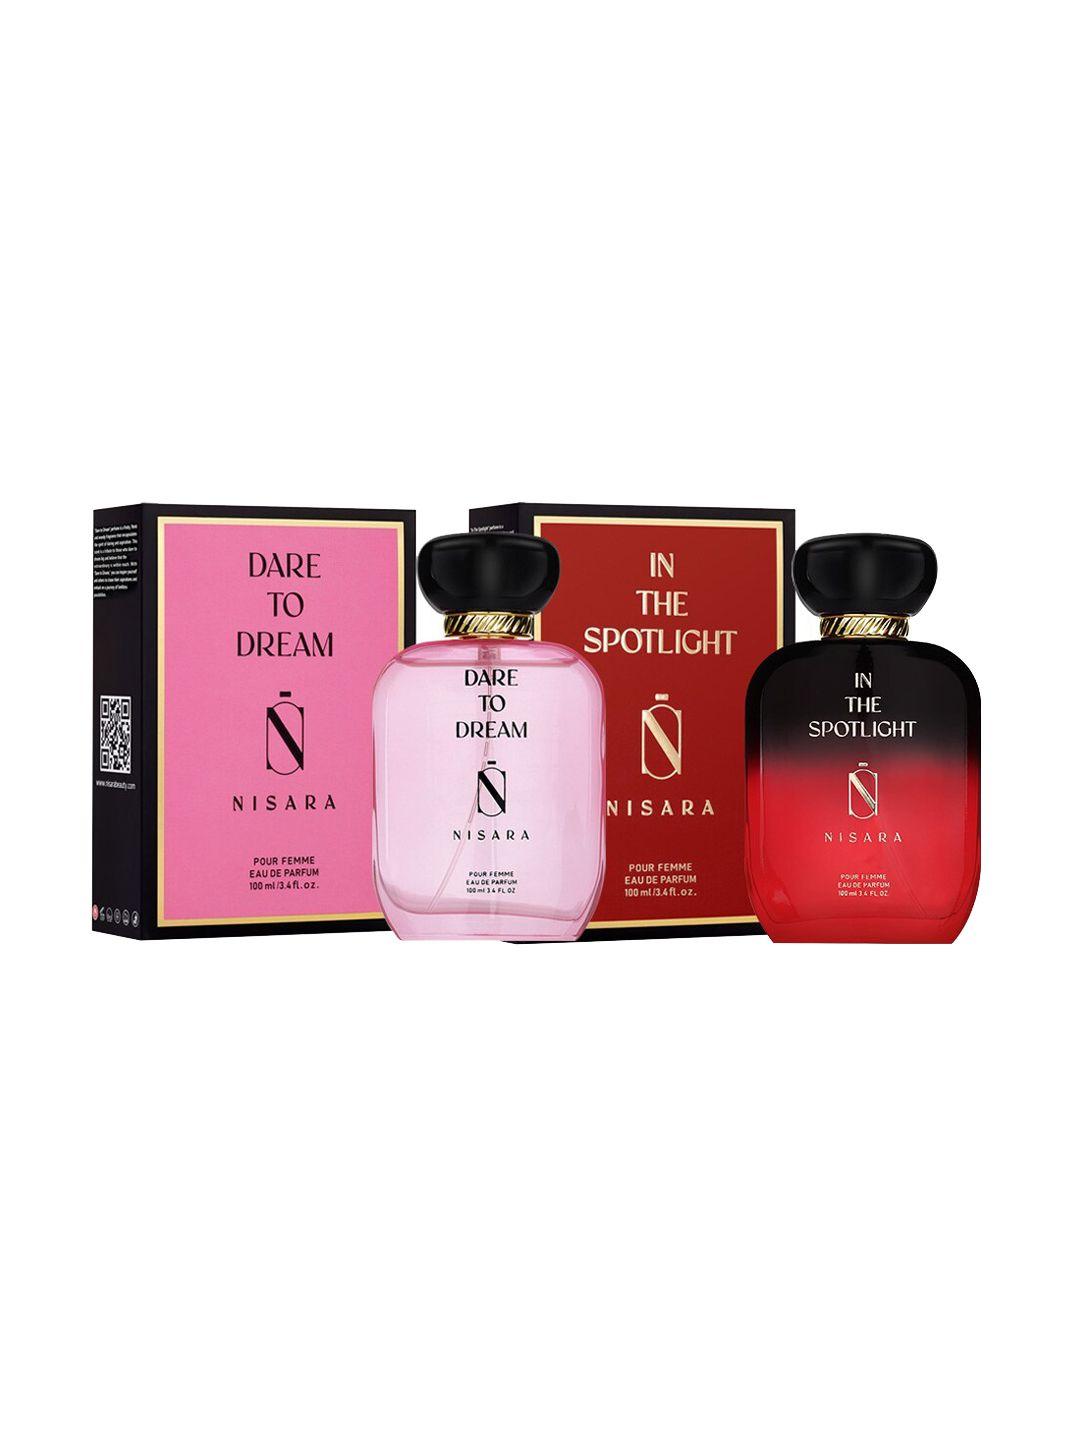 nisara set of 2 dare to dream & in the spotlight eau de perfume - 100ml each